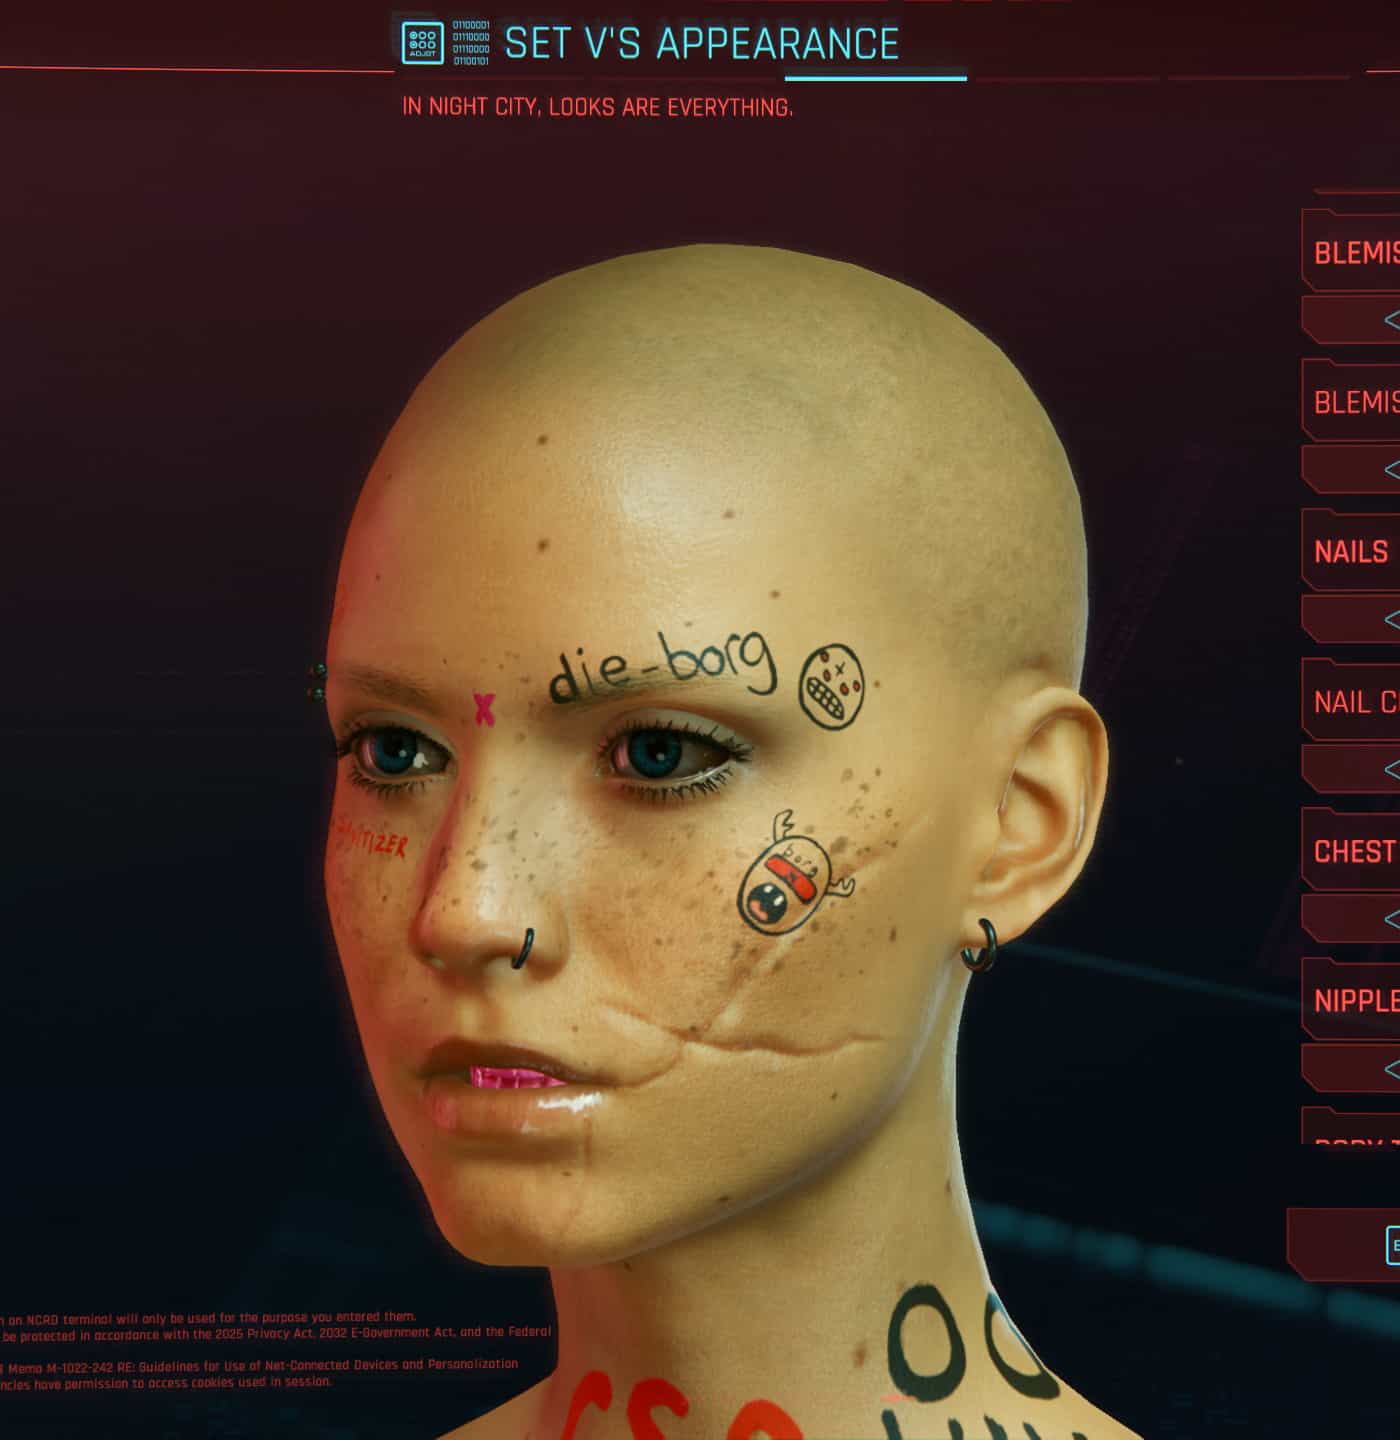 xResistances Devilish Face Tattoo  Cyberpunk 2077 Mod